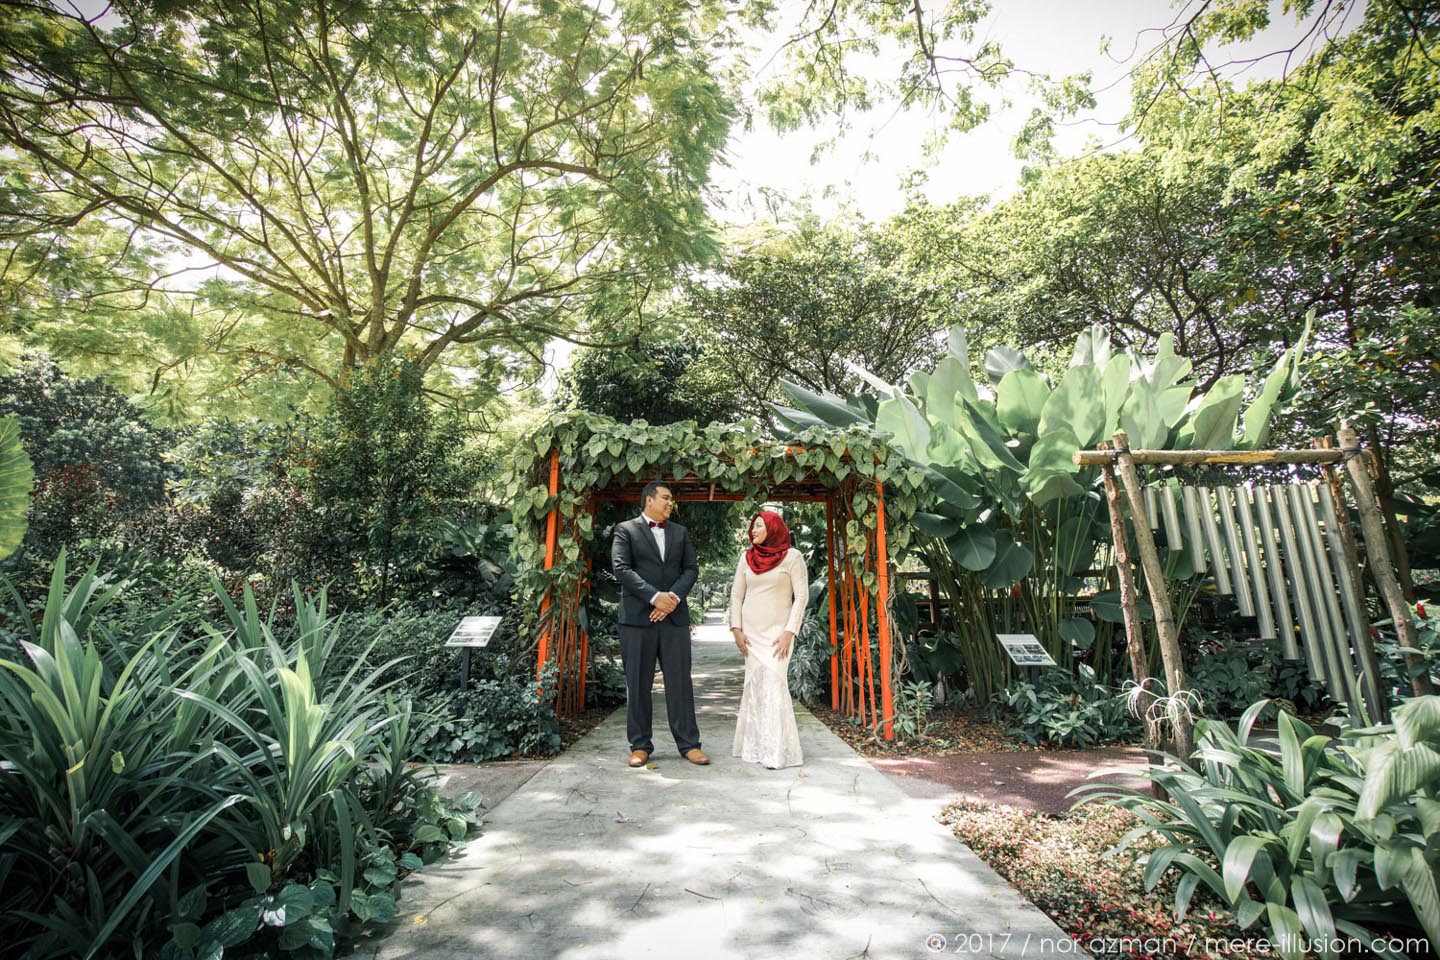 Hort Park Singapore wedding shoot